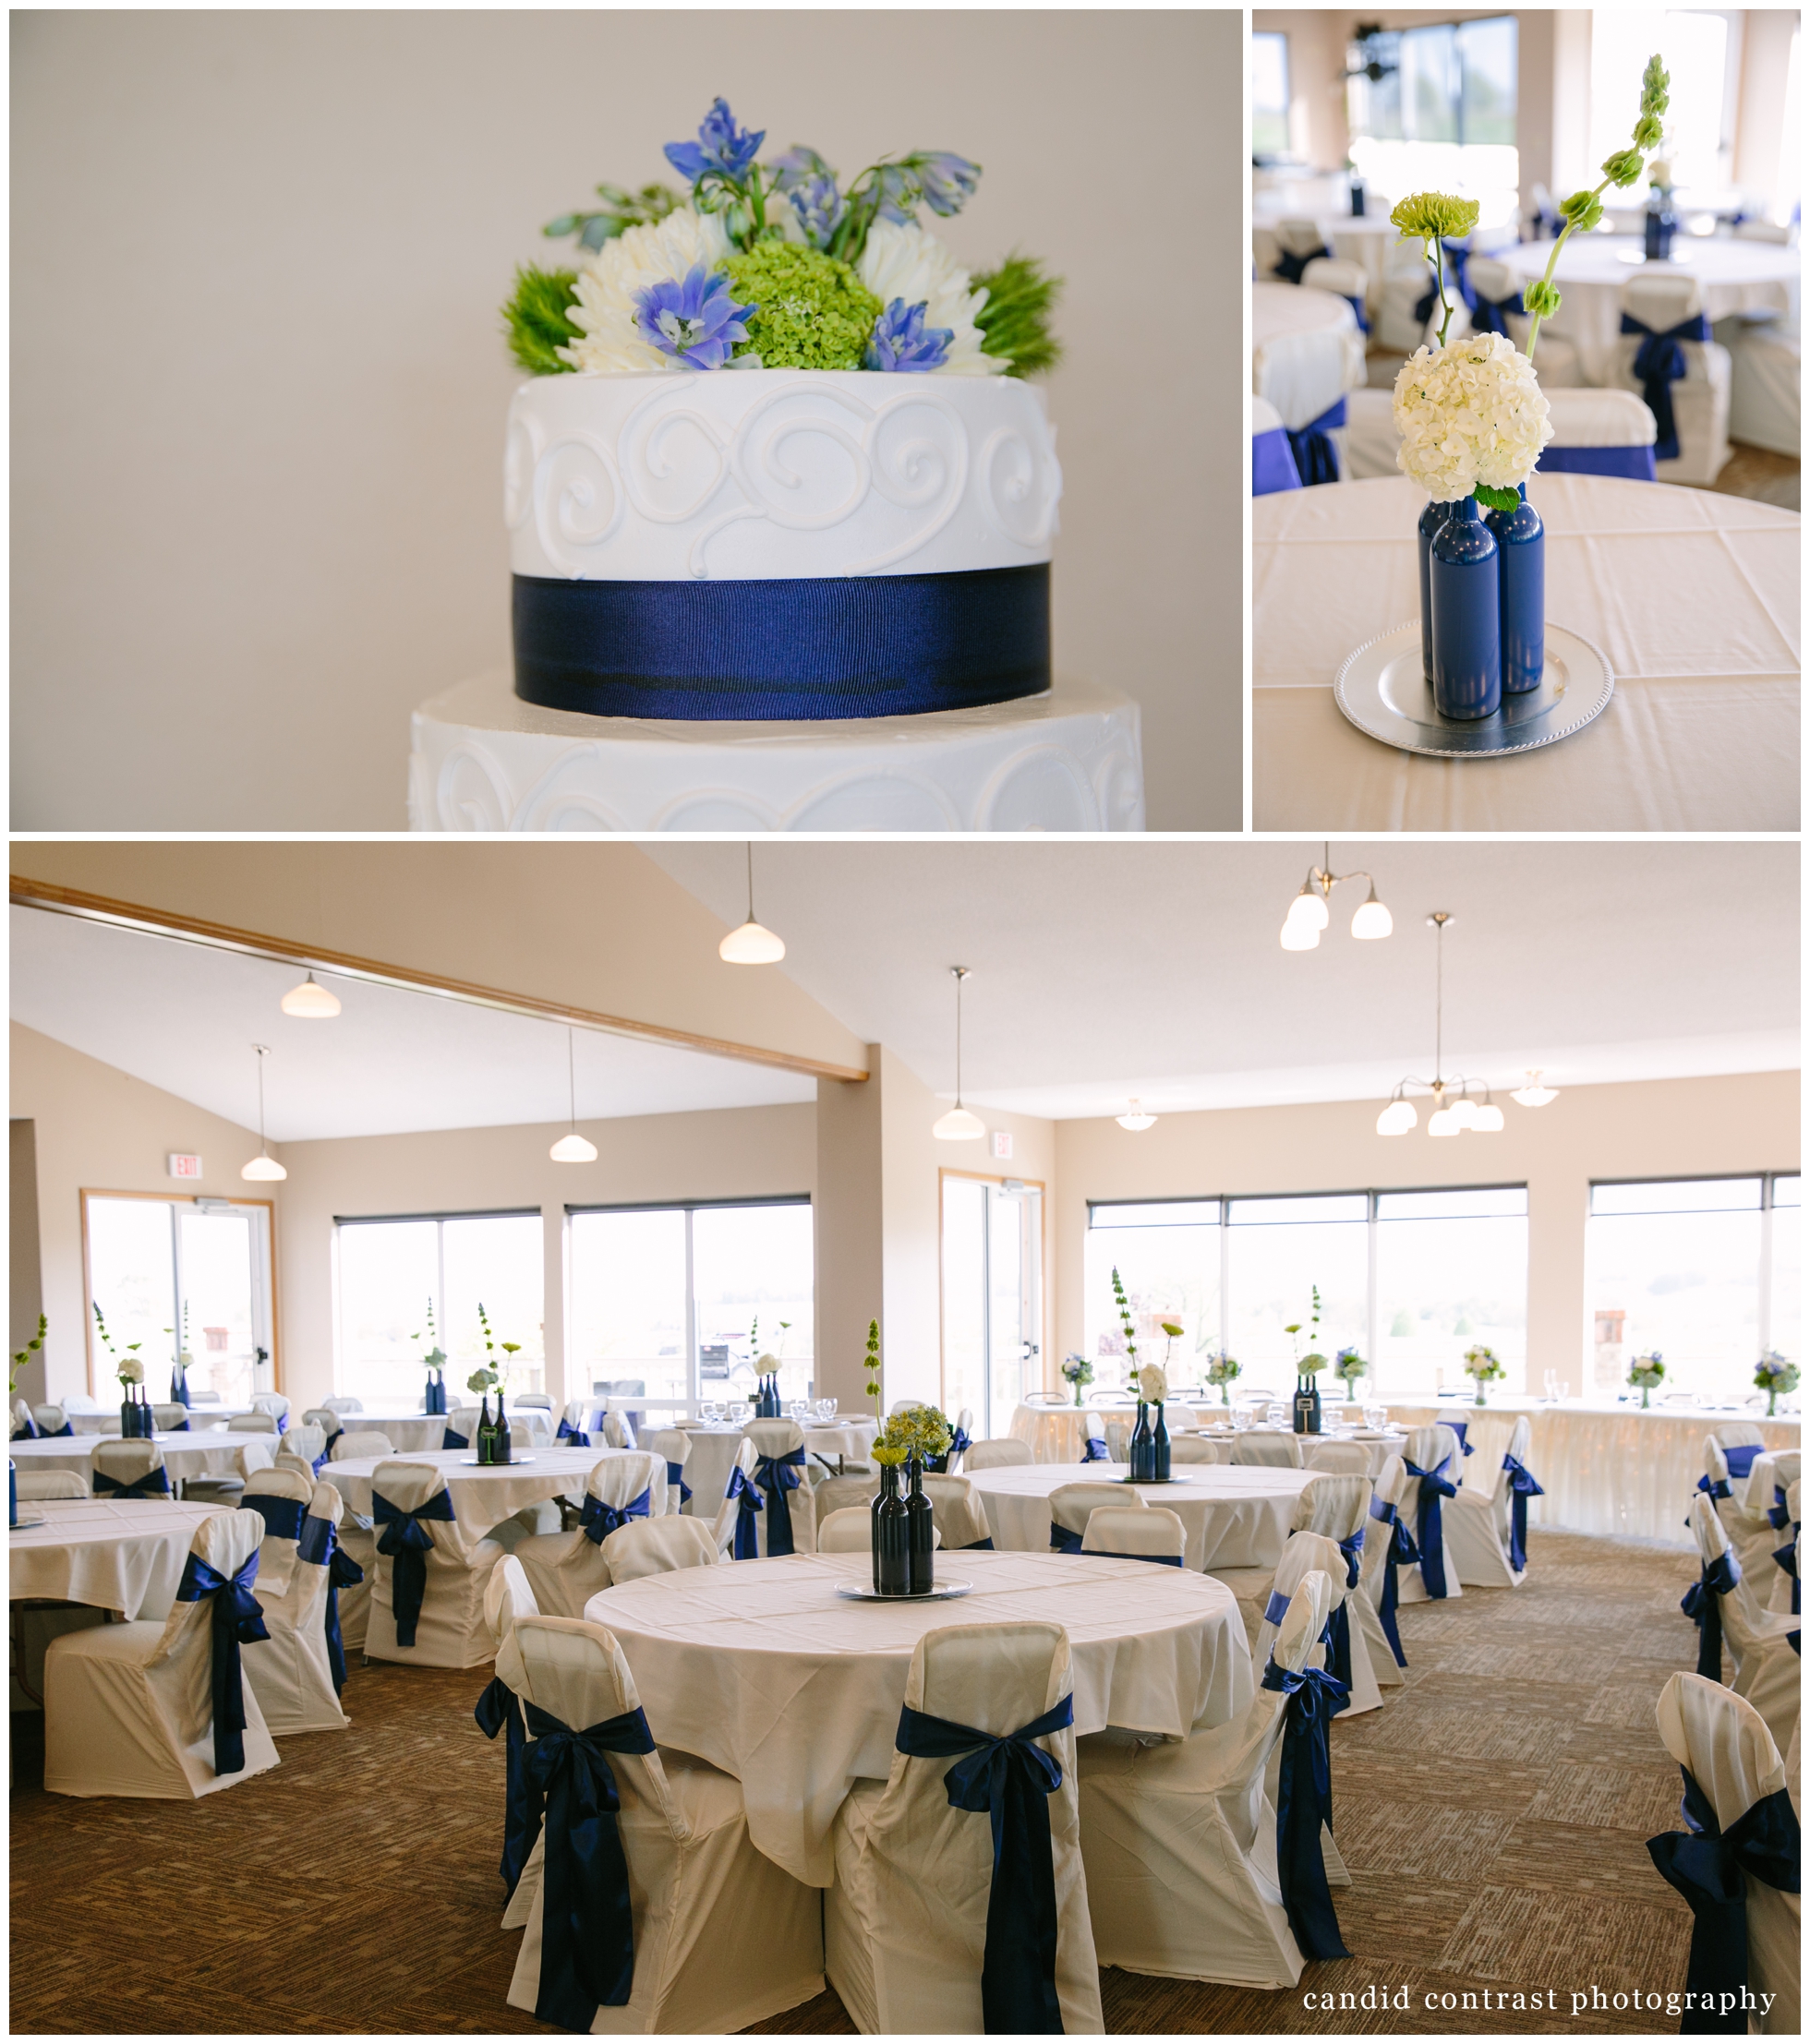 wedding reception details at the Meadows Golf Club, Dubuque iowa wedding, candid contrast photography